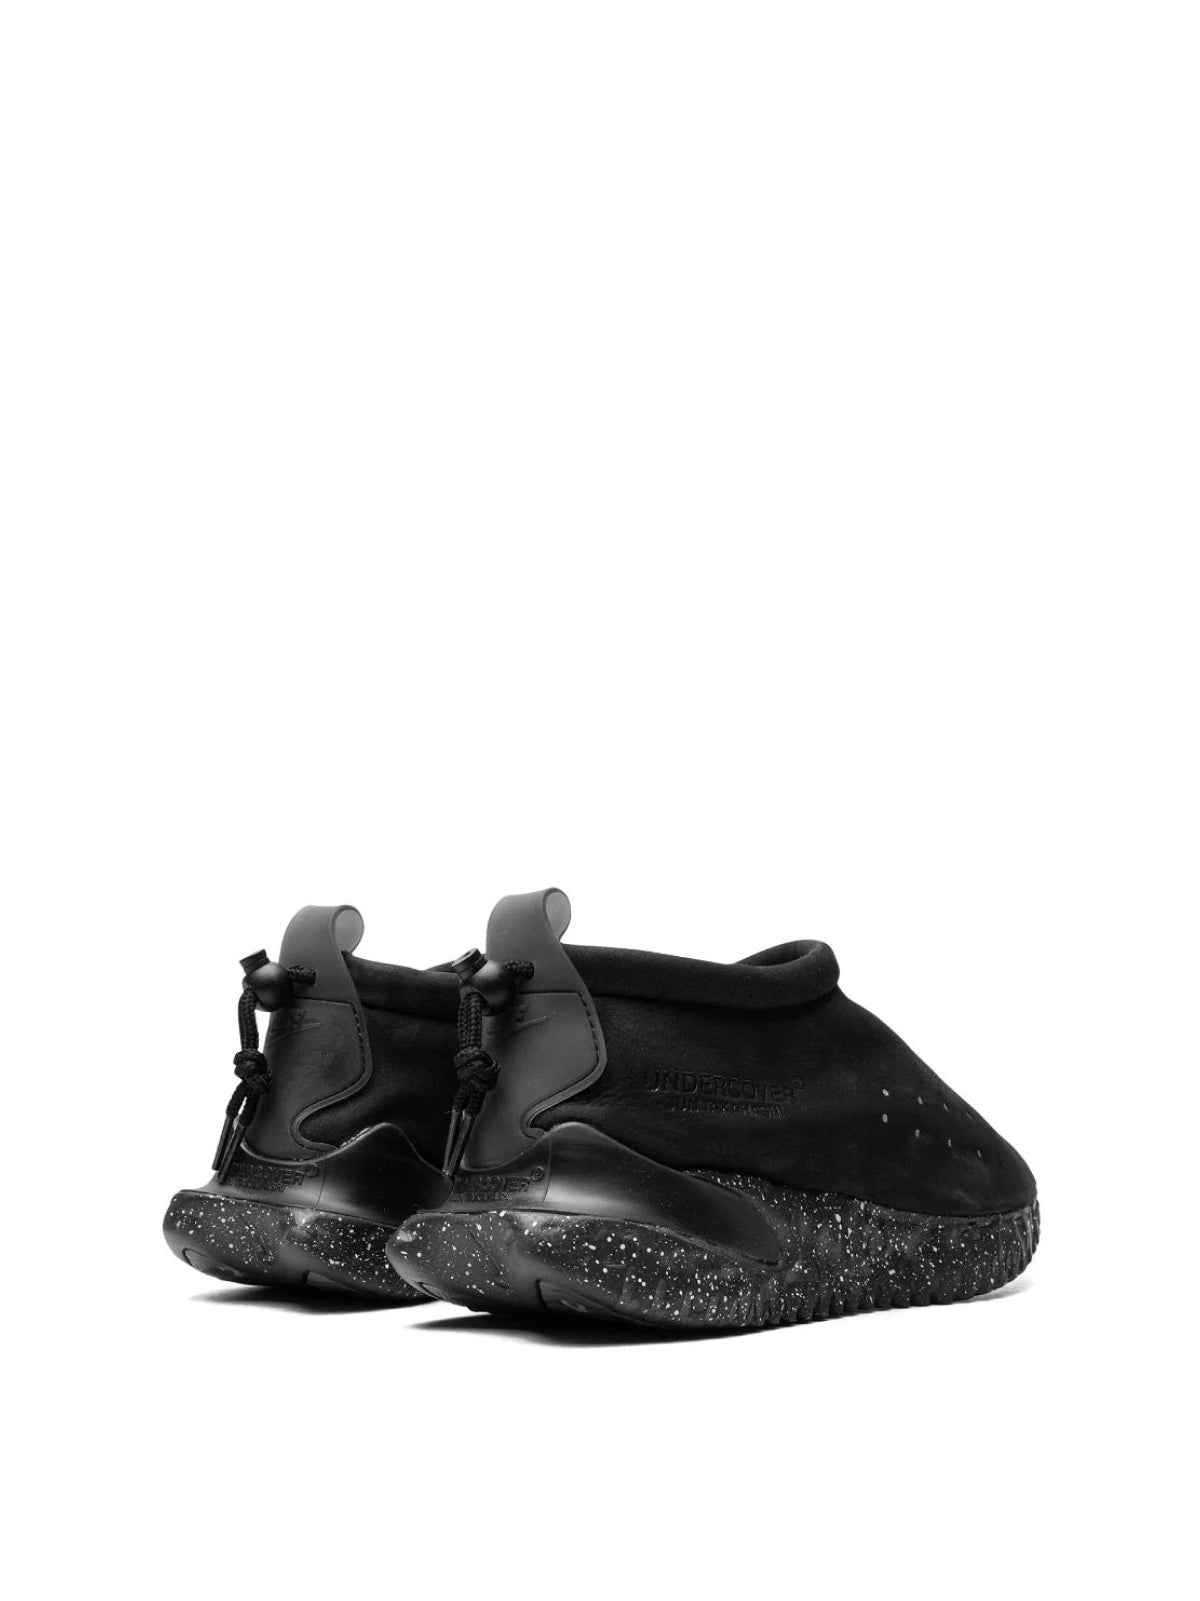 Nike-OUTLET-SALE-Nike Moc Flow SP x Undercover Sneakers-ARCHIVIST